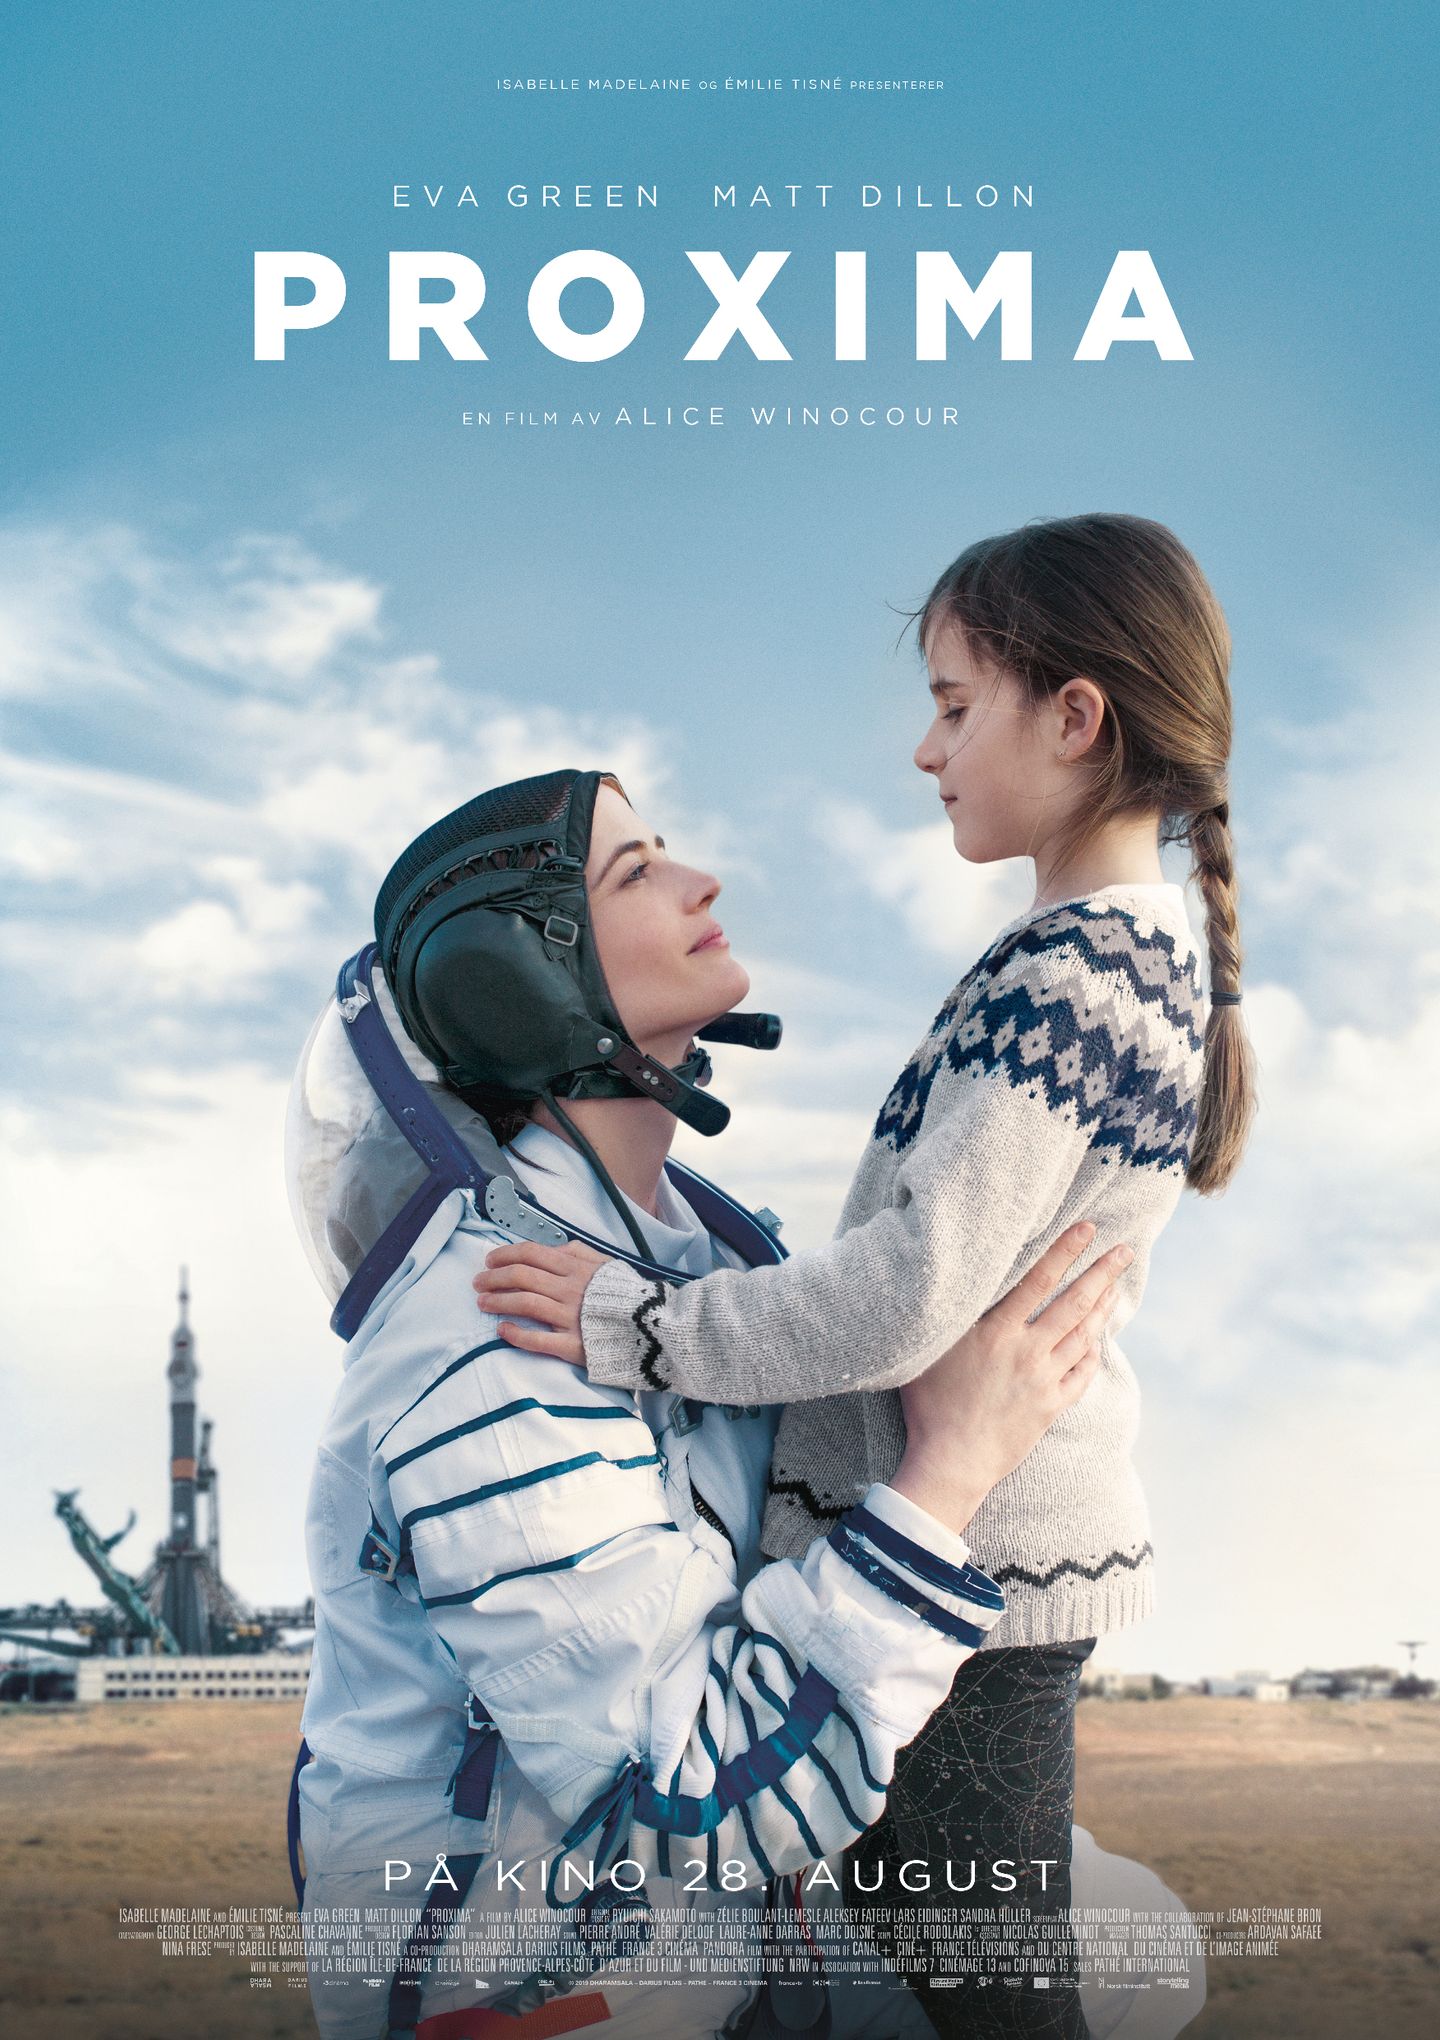 Plakat for 'Proxima'